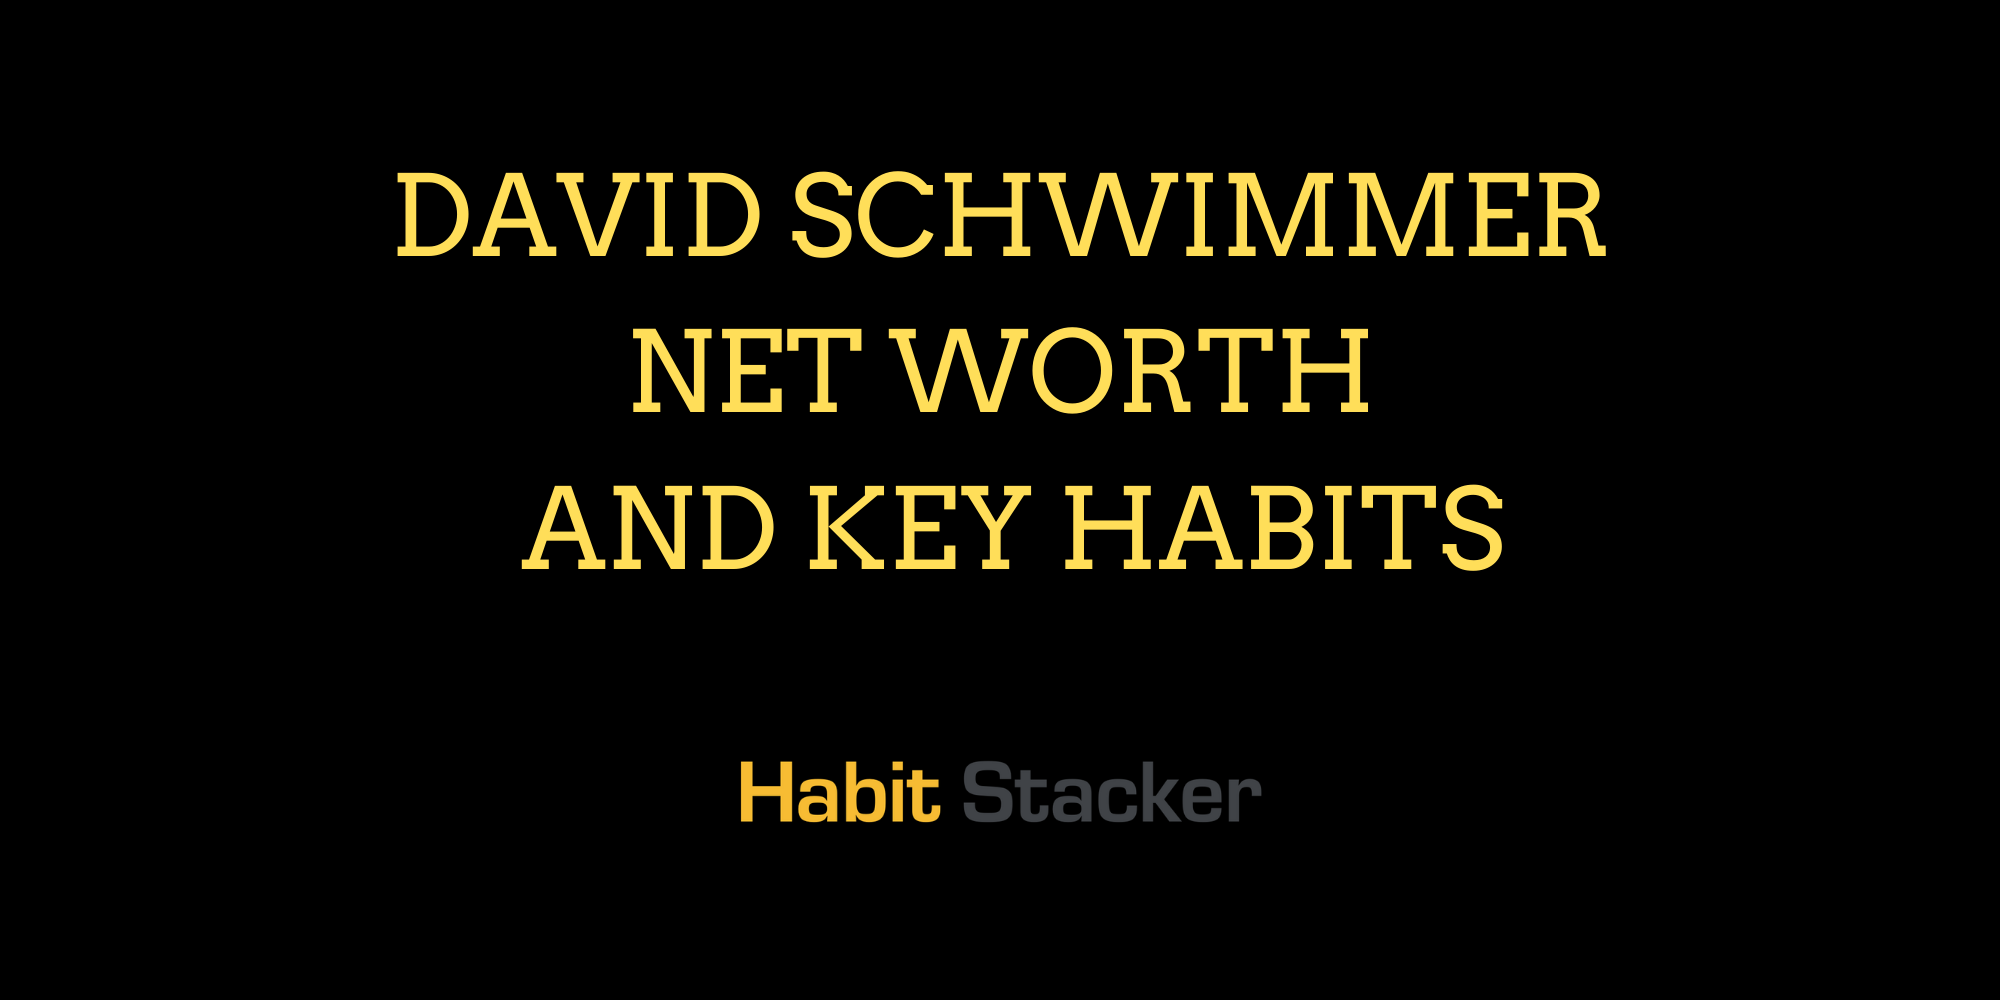 David Schwimmer Net Worth and Key Habits